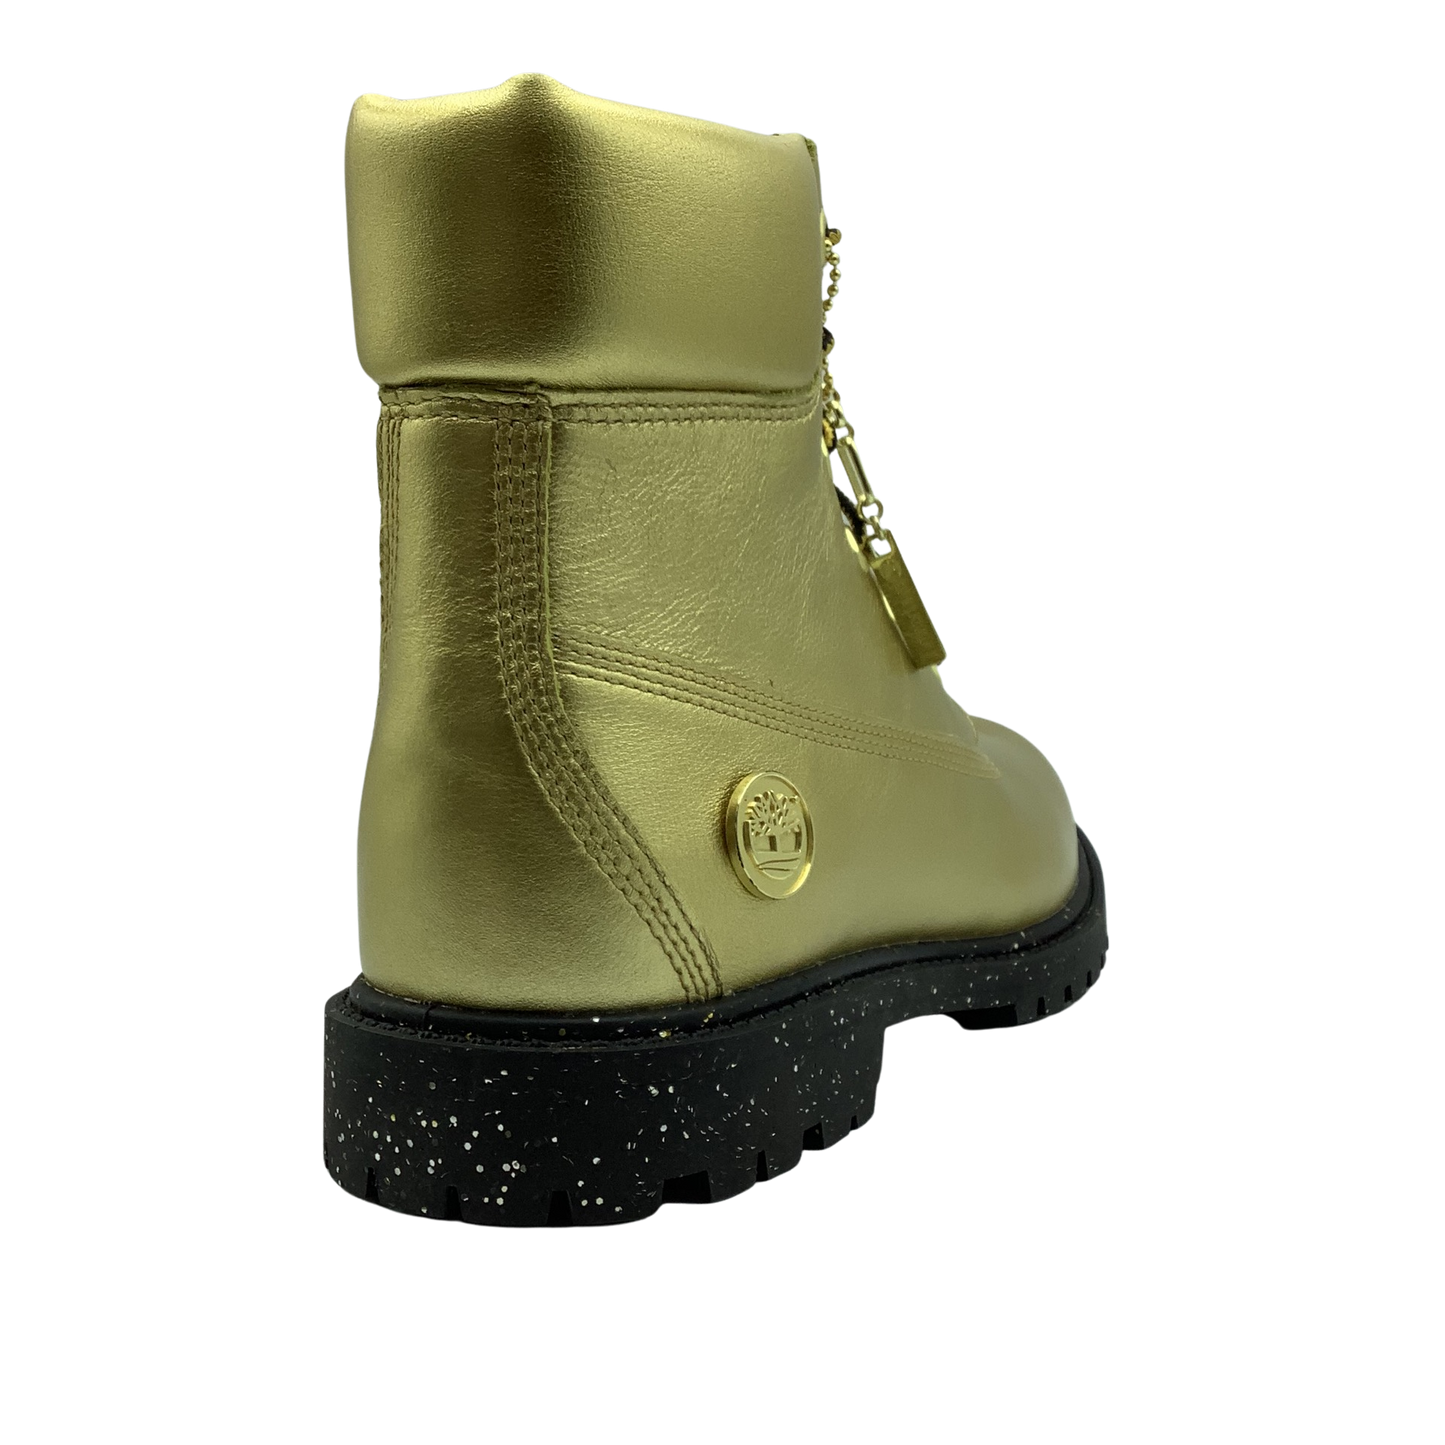 Timberland Heritage 6IN waterproof boot